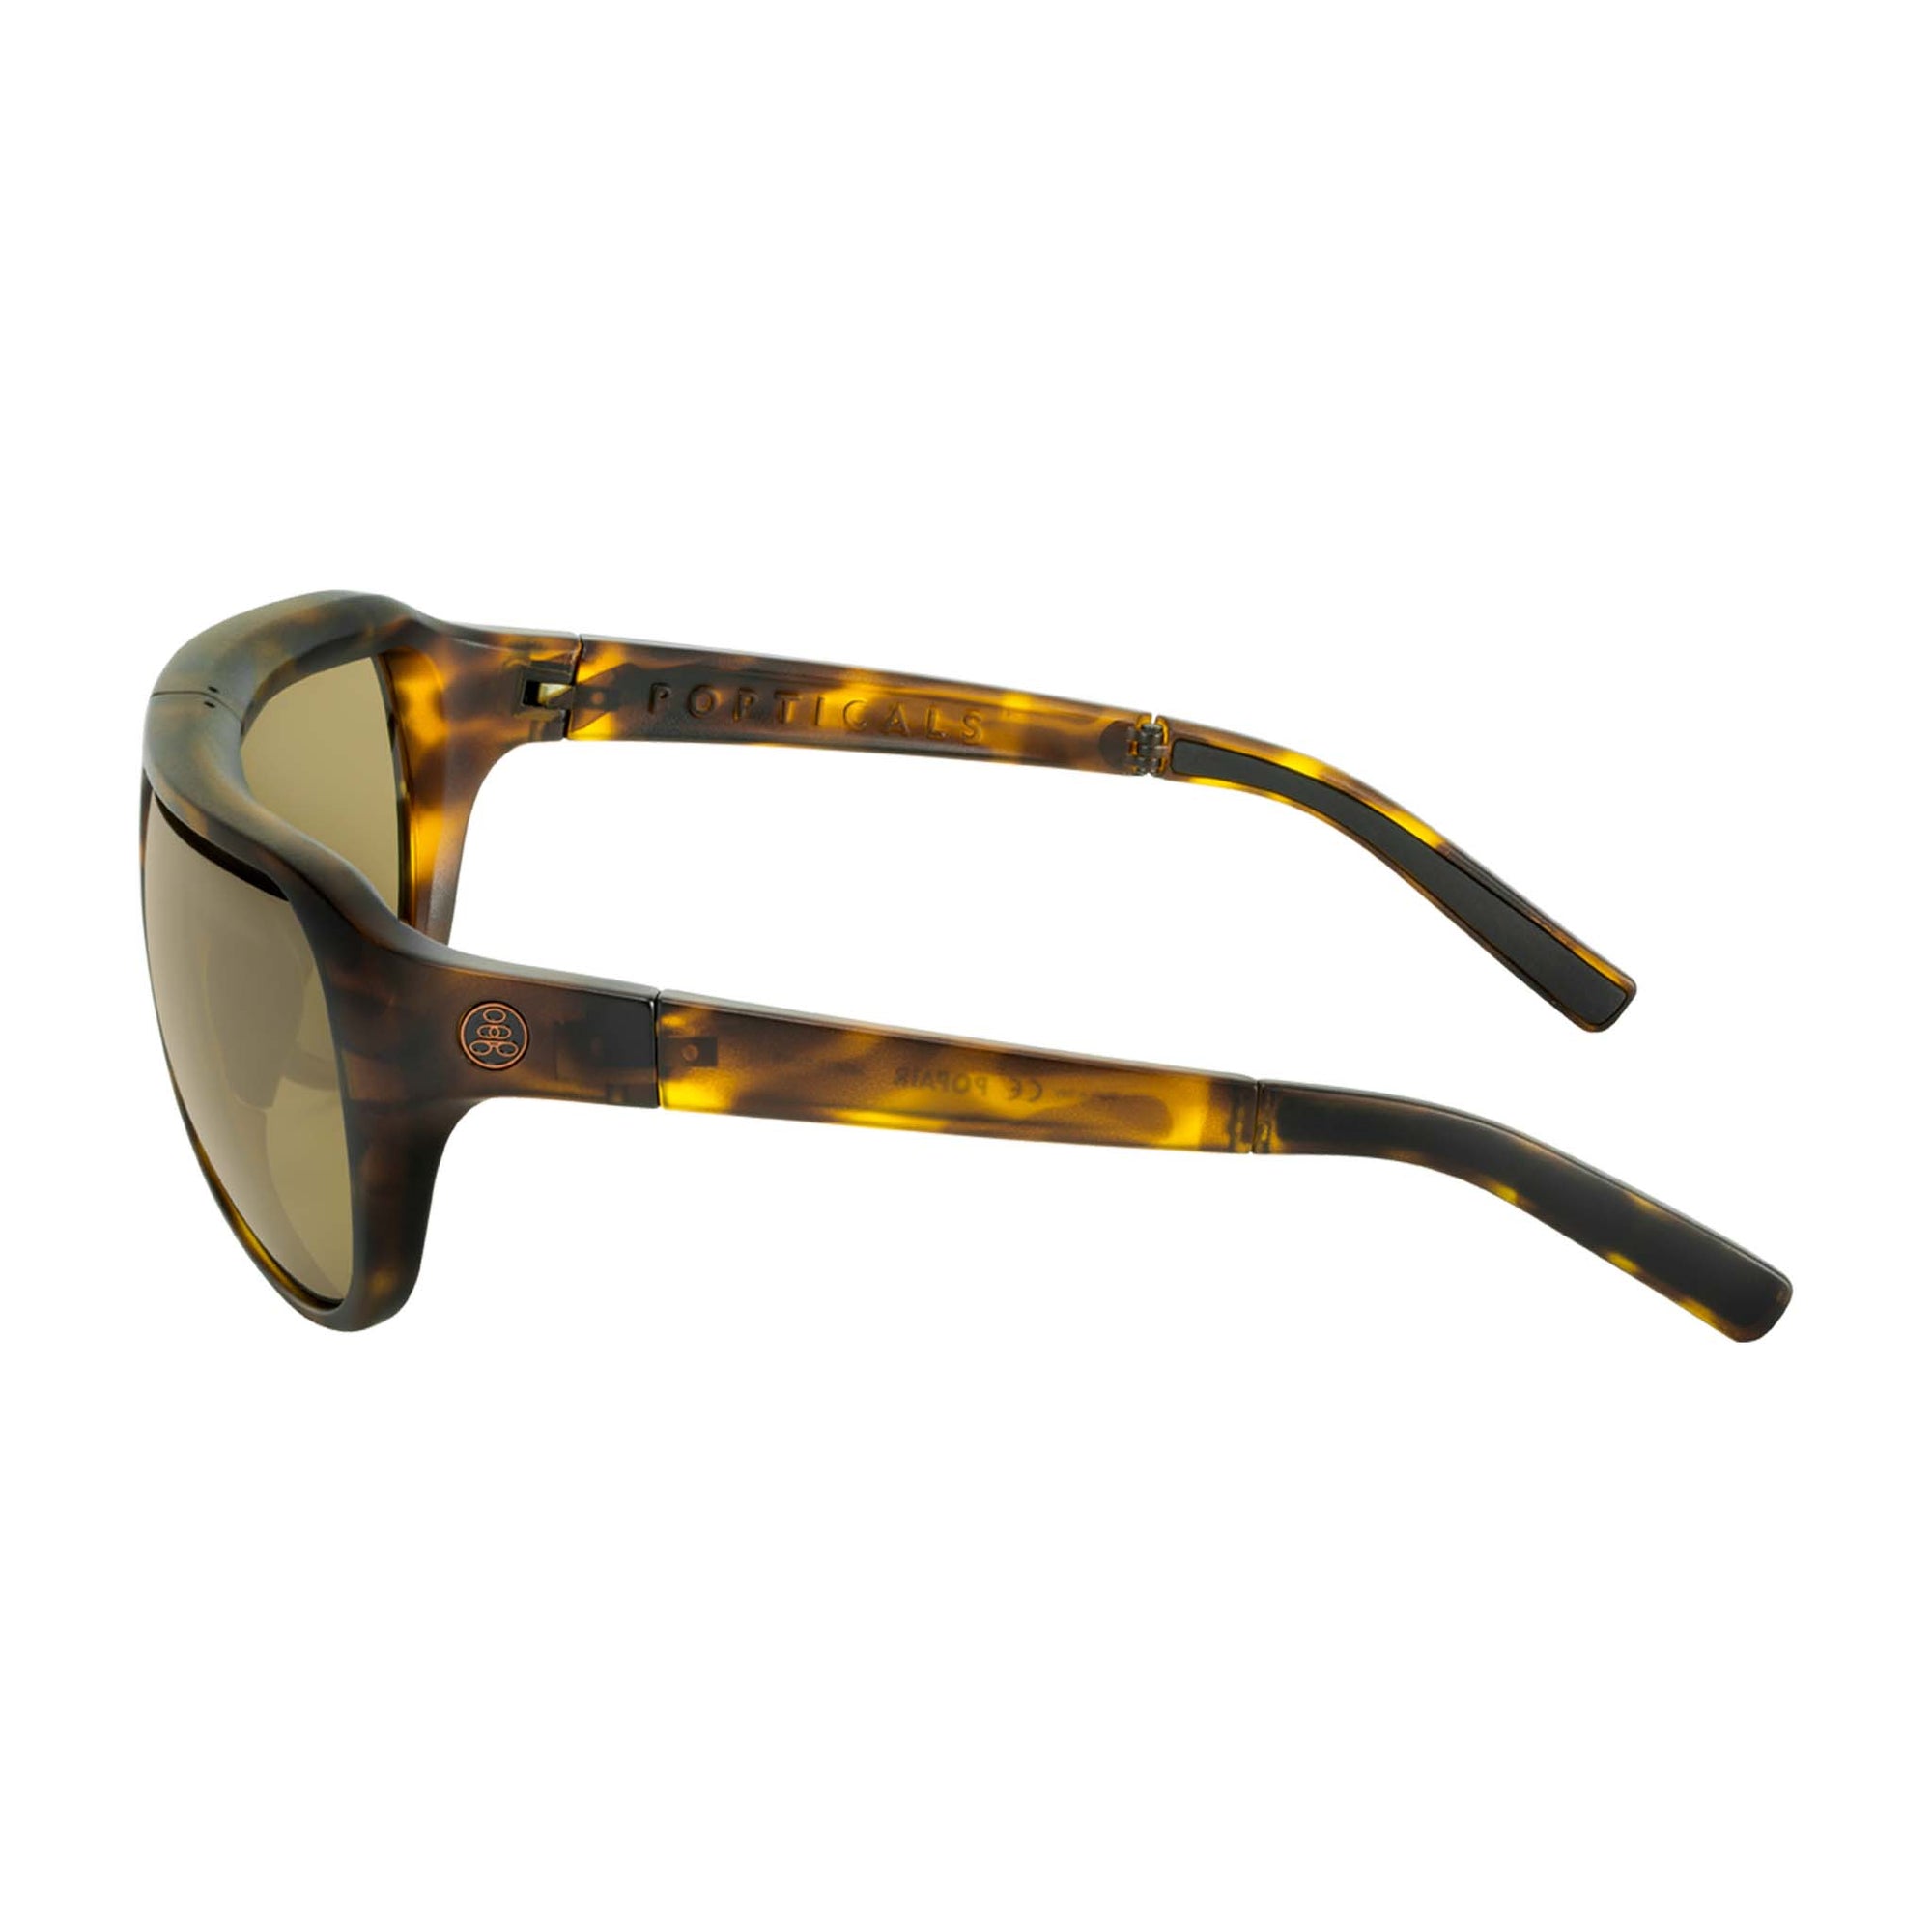 Popticals, Premium Compact Sunglasses, PopAir, 300010-CUNS, Standard Sunglasses, Matte Tortoise Frame, Brown Lenses, Side View